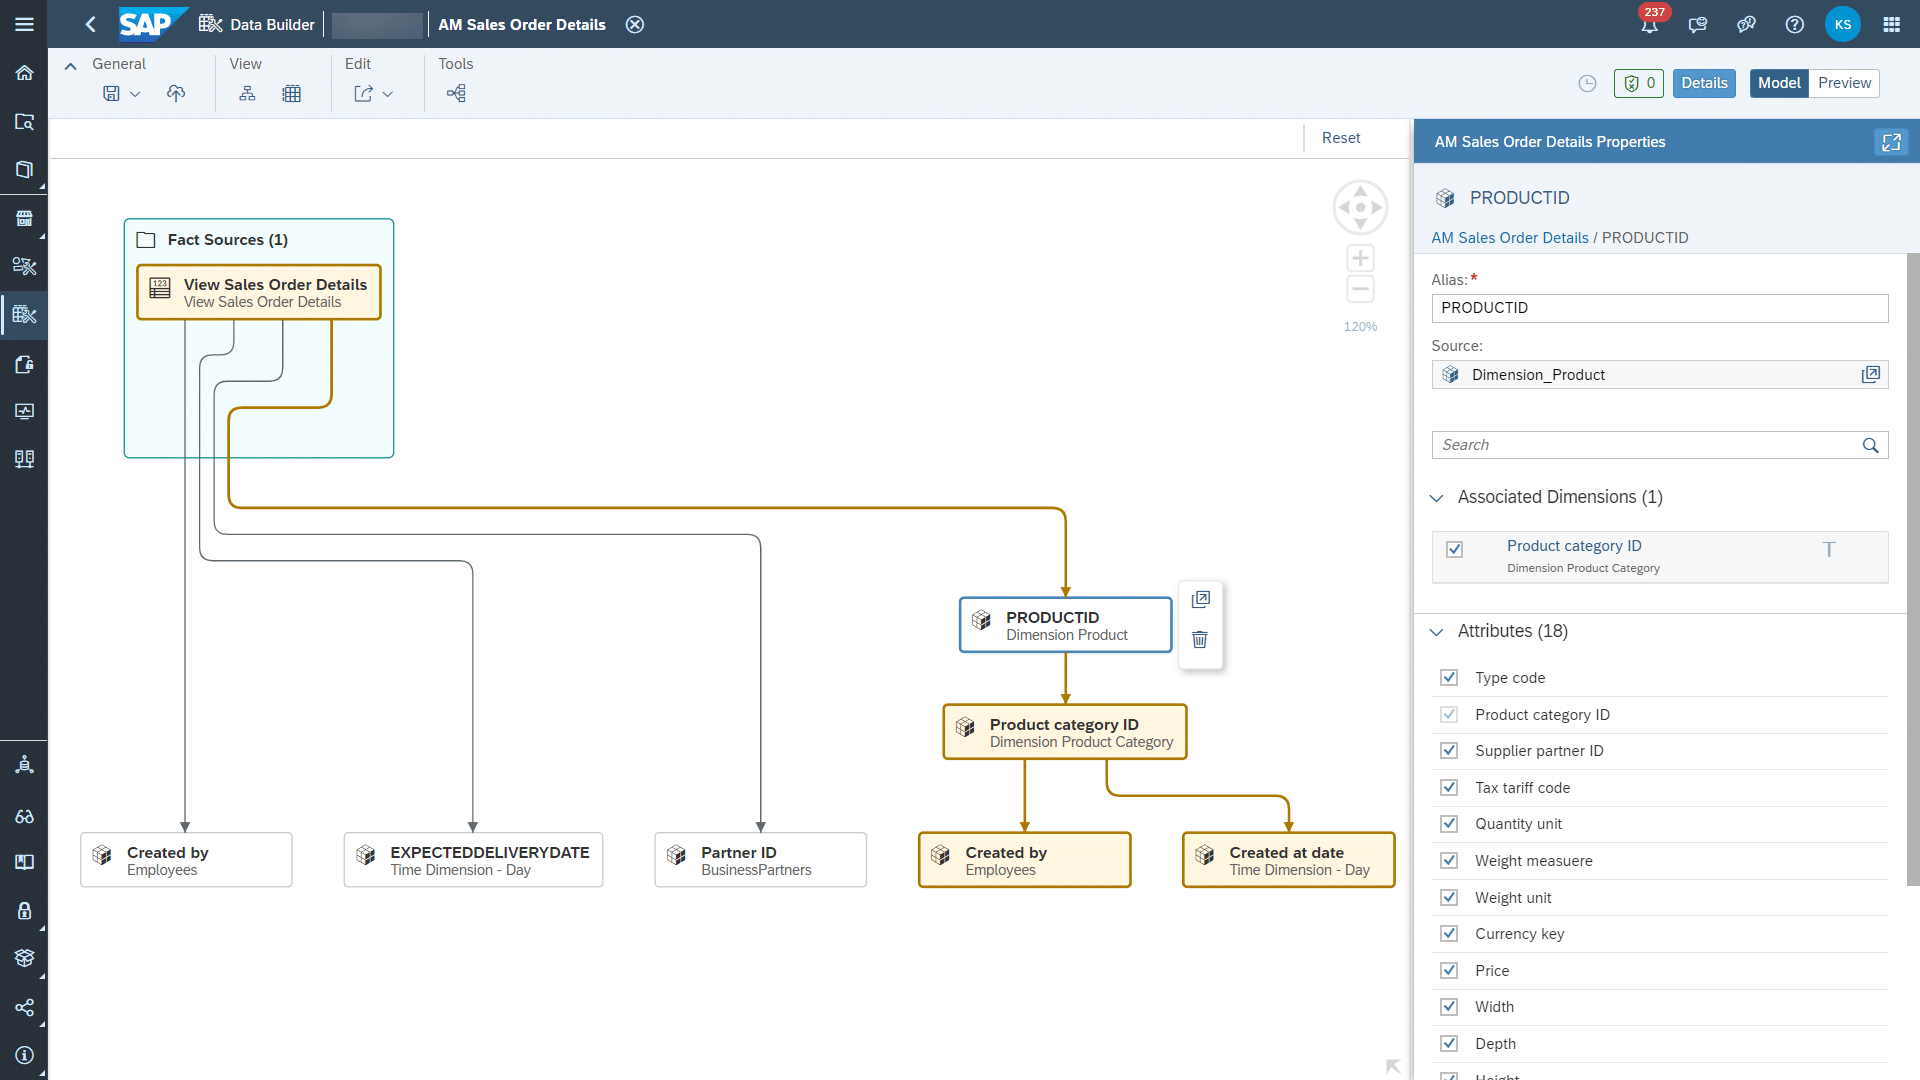 Screenshot of SAP Datasphere data builder